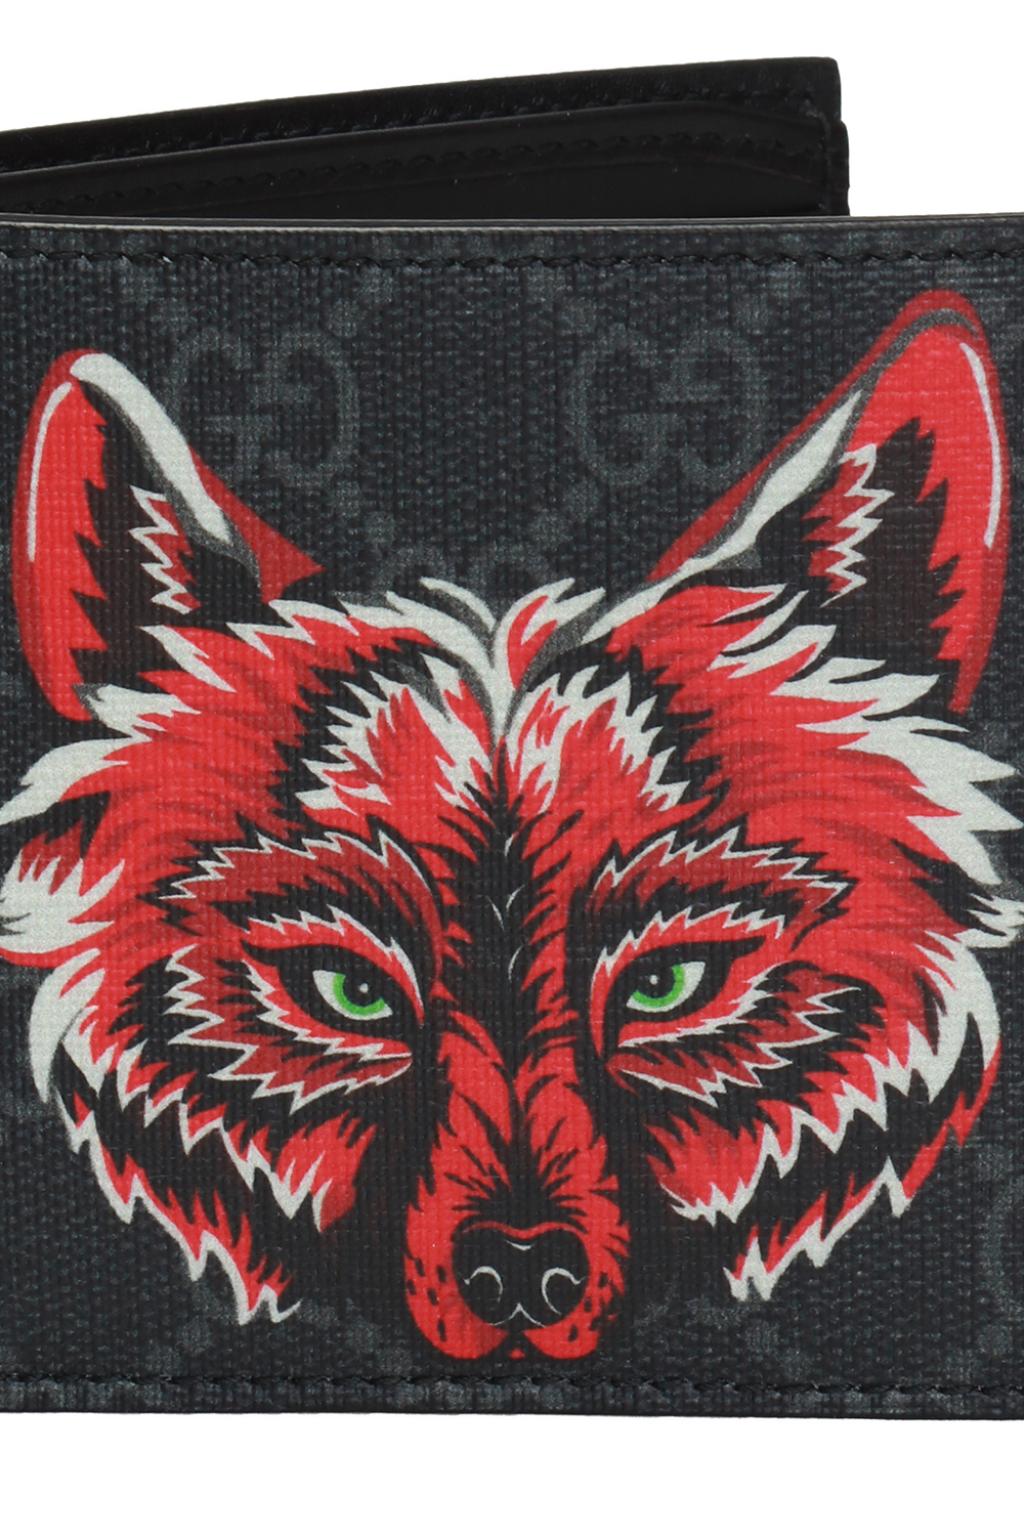 Wolf head motif wallet Gucci - Vitkac 